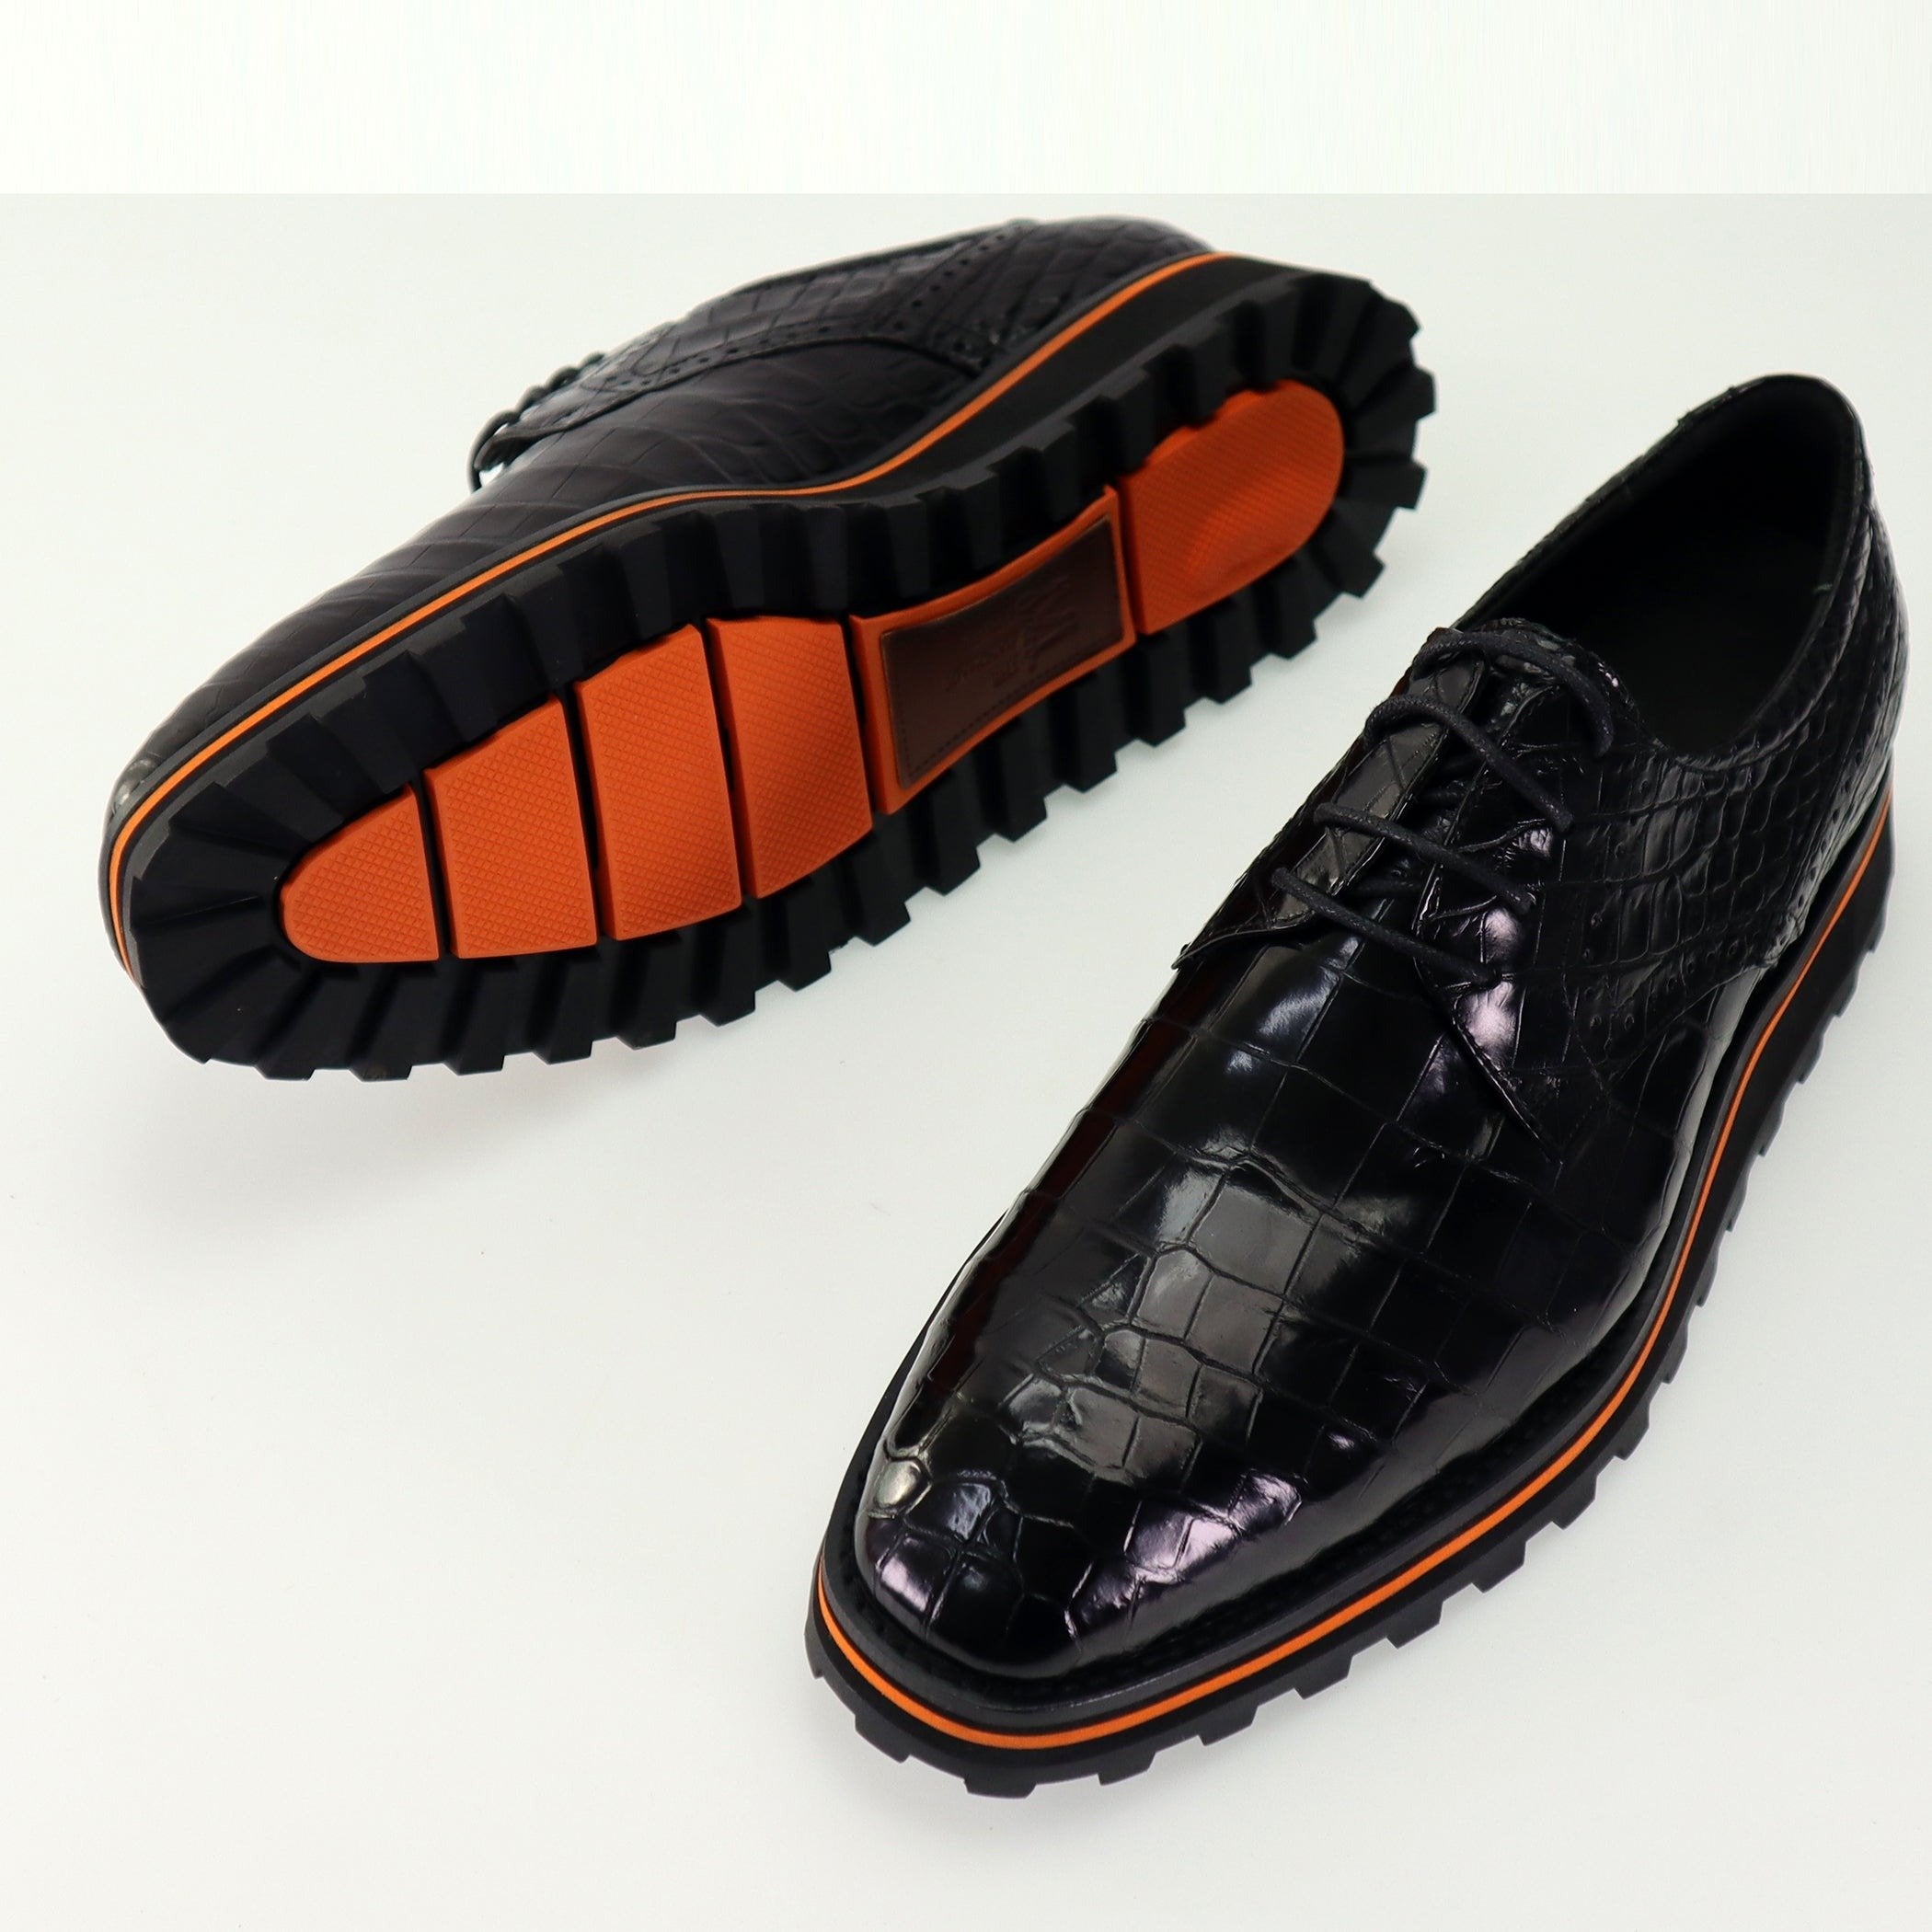 Men's Shoes Genuine Crocodile Alligator Skin Leather Handmade